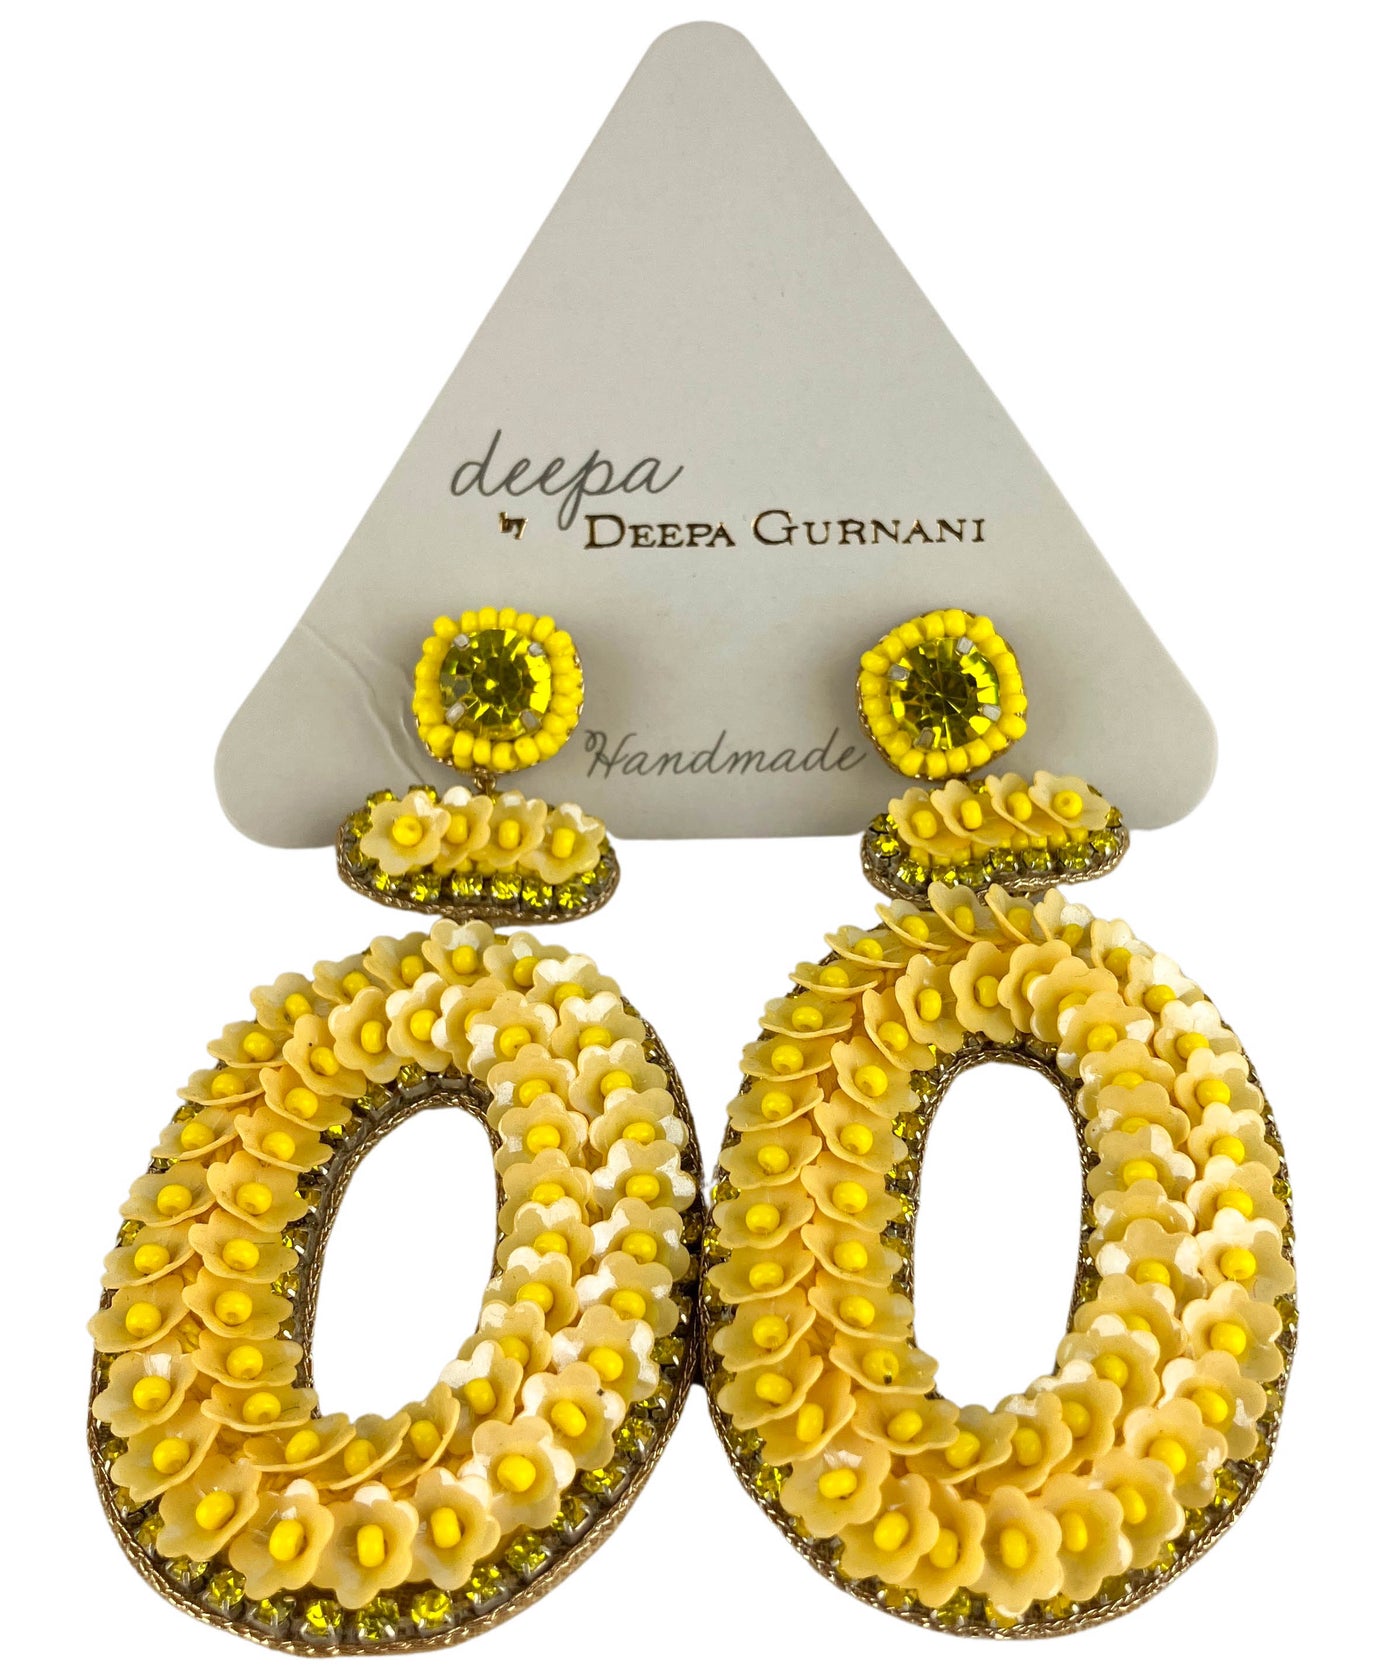 Deepa by Deepa Gurnani Britt Earrings in Yellow - Discounts on Deepa Gurnani at UAL